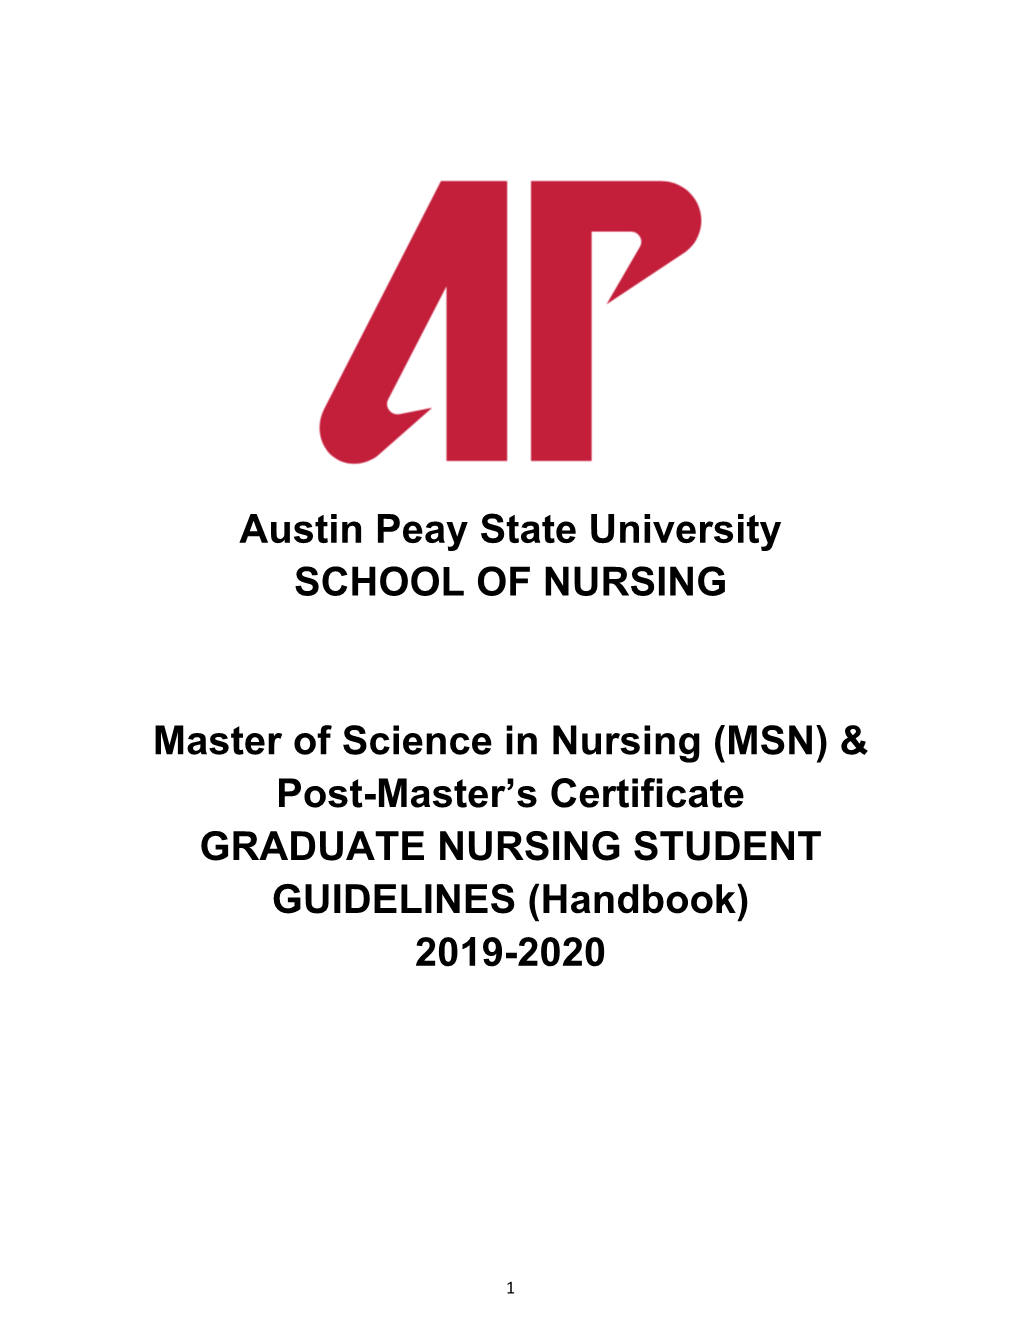 (MSN) & Post-Master's Certificate GRADUATE